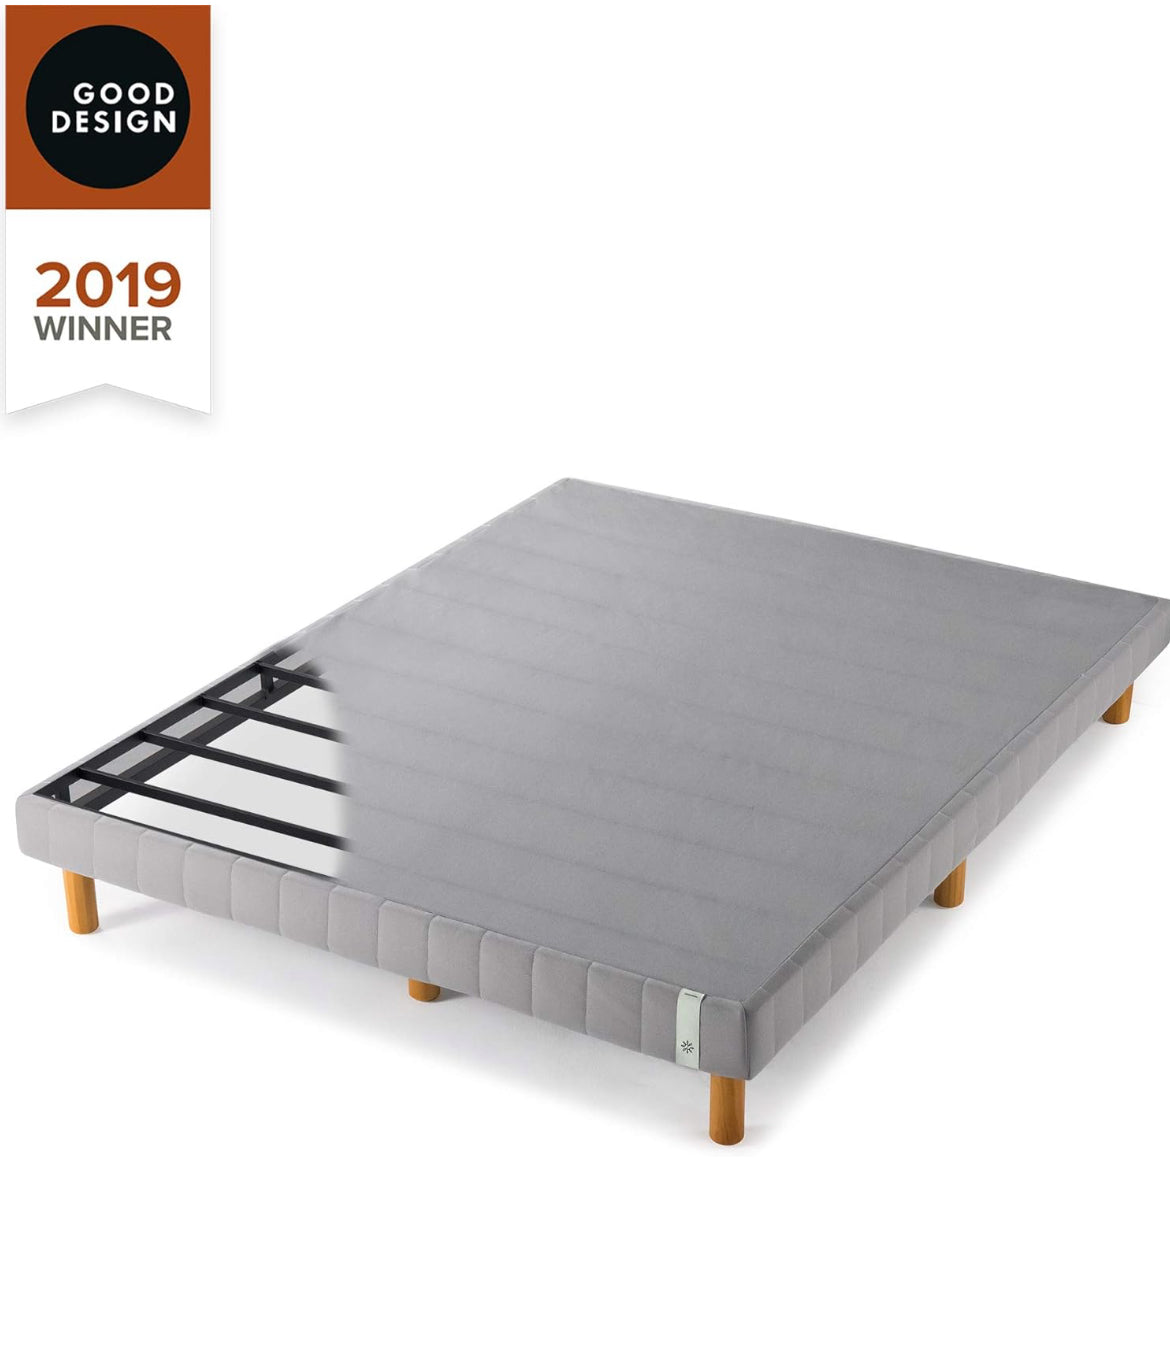 California King - ZINUS GOOD DESIGN Award Winner Justina Metal Mattress Foundation / 11 Inch Platform Bed / No Box Spring Needed, Gray